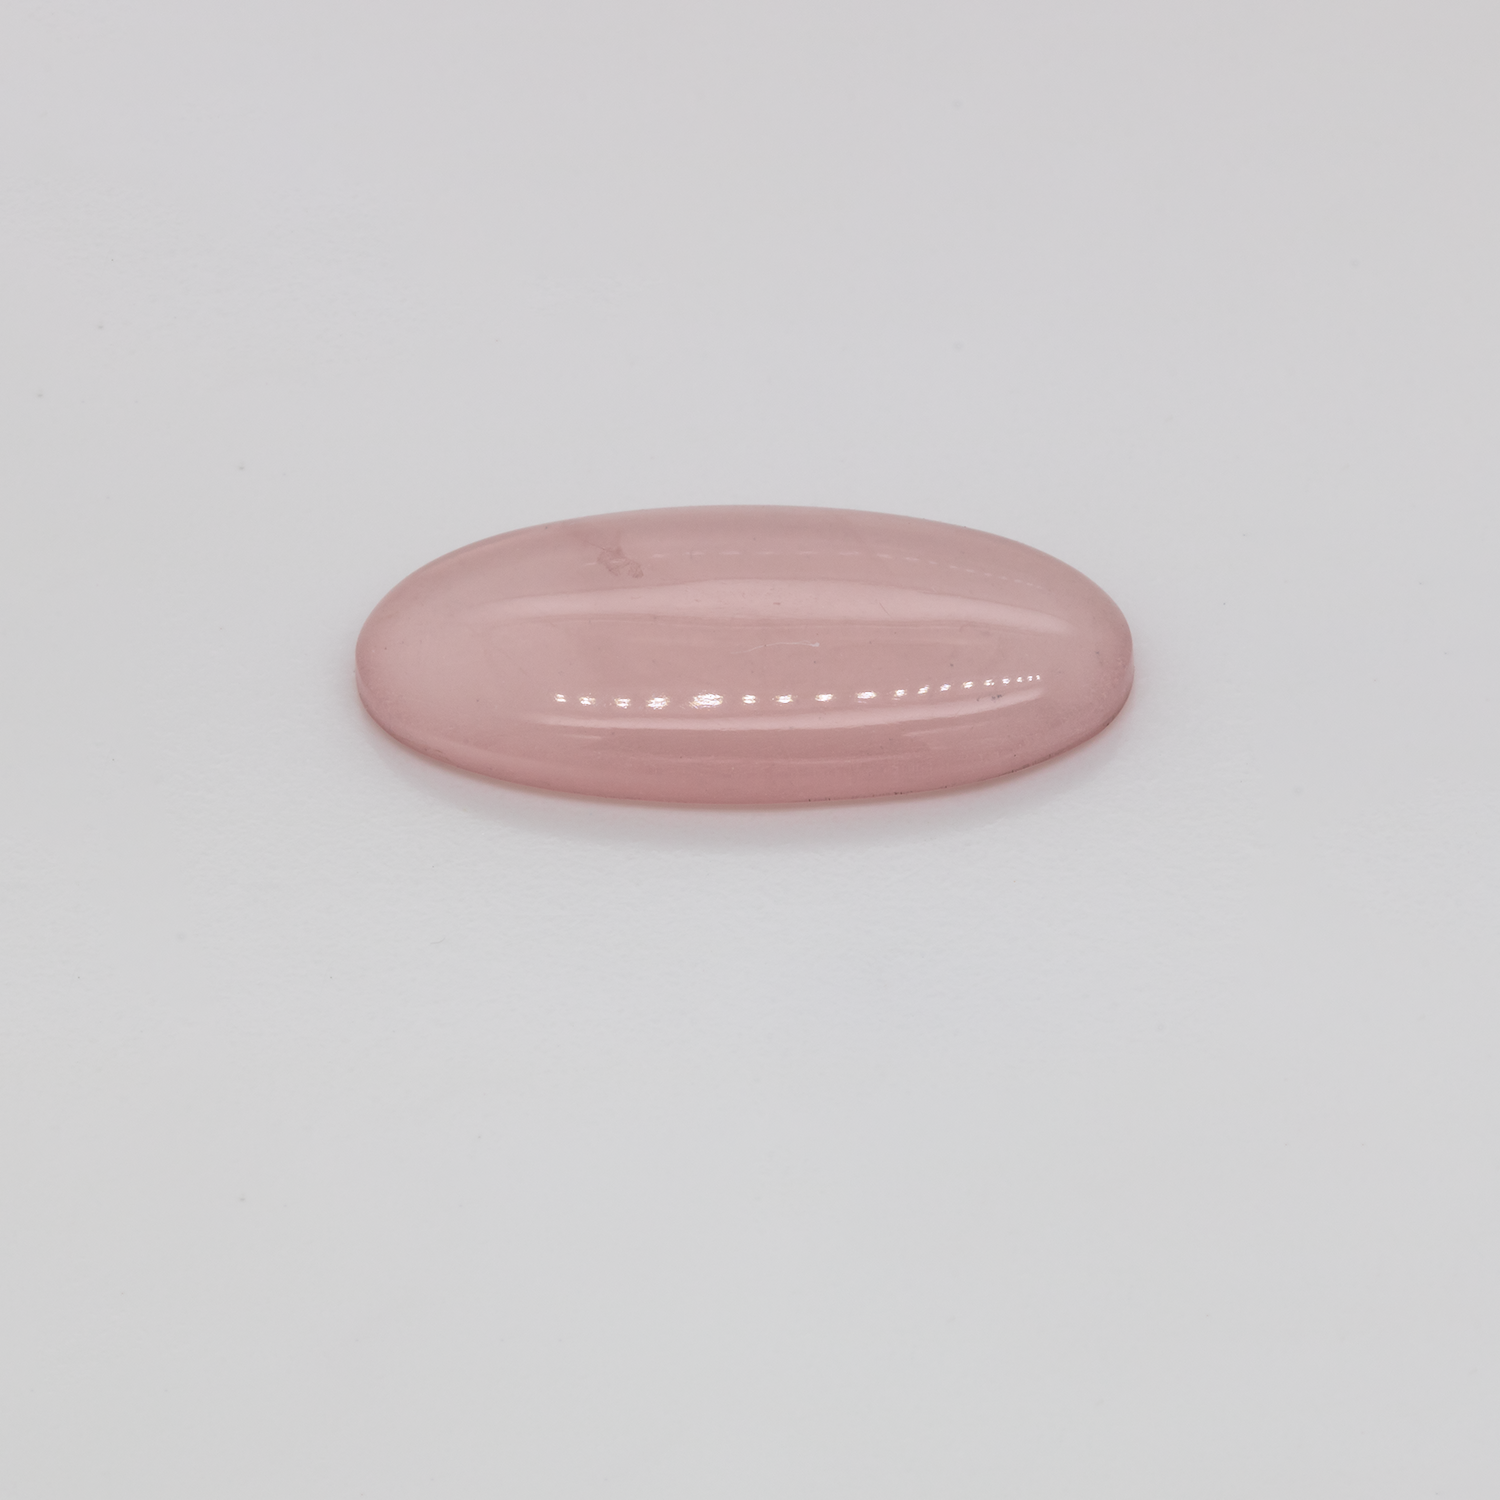 Rose quarz - pink, oval 19.6x9.6 mm, 5.10 cts, No. RO00006